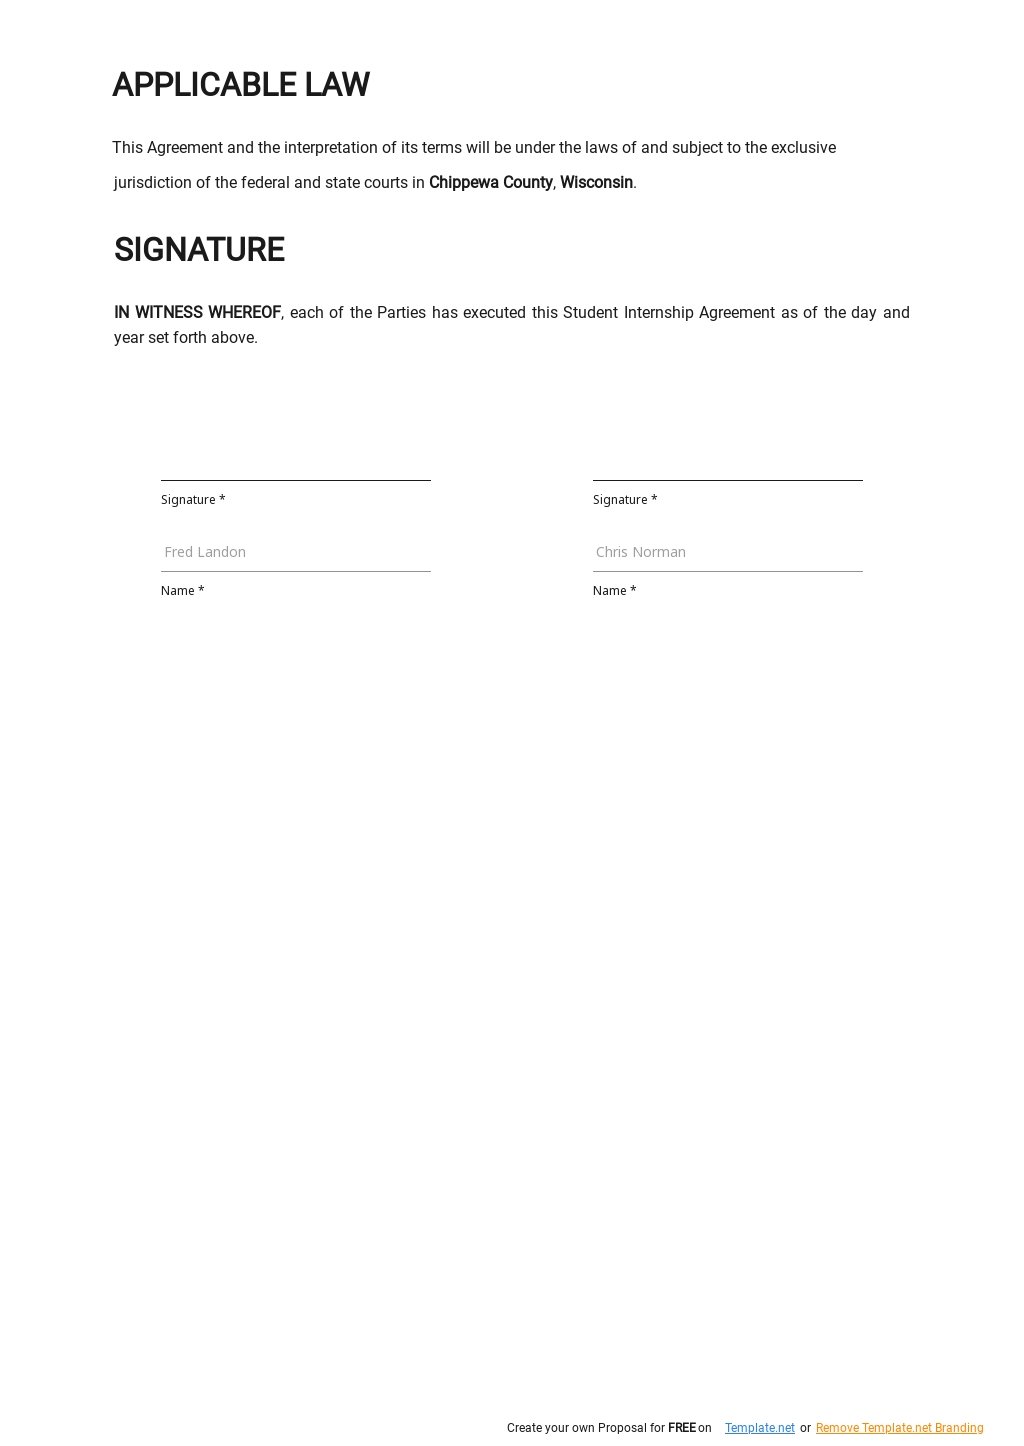 Student Internship Agreement Template [Free PDF]